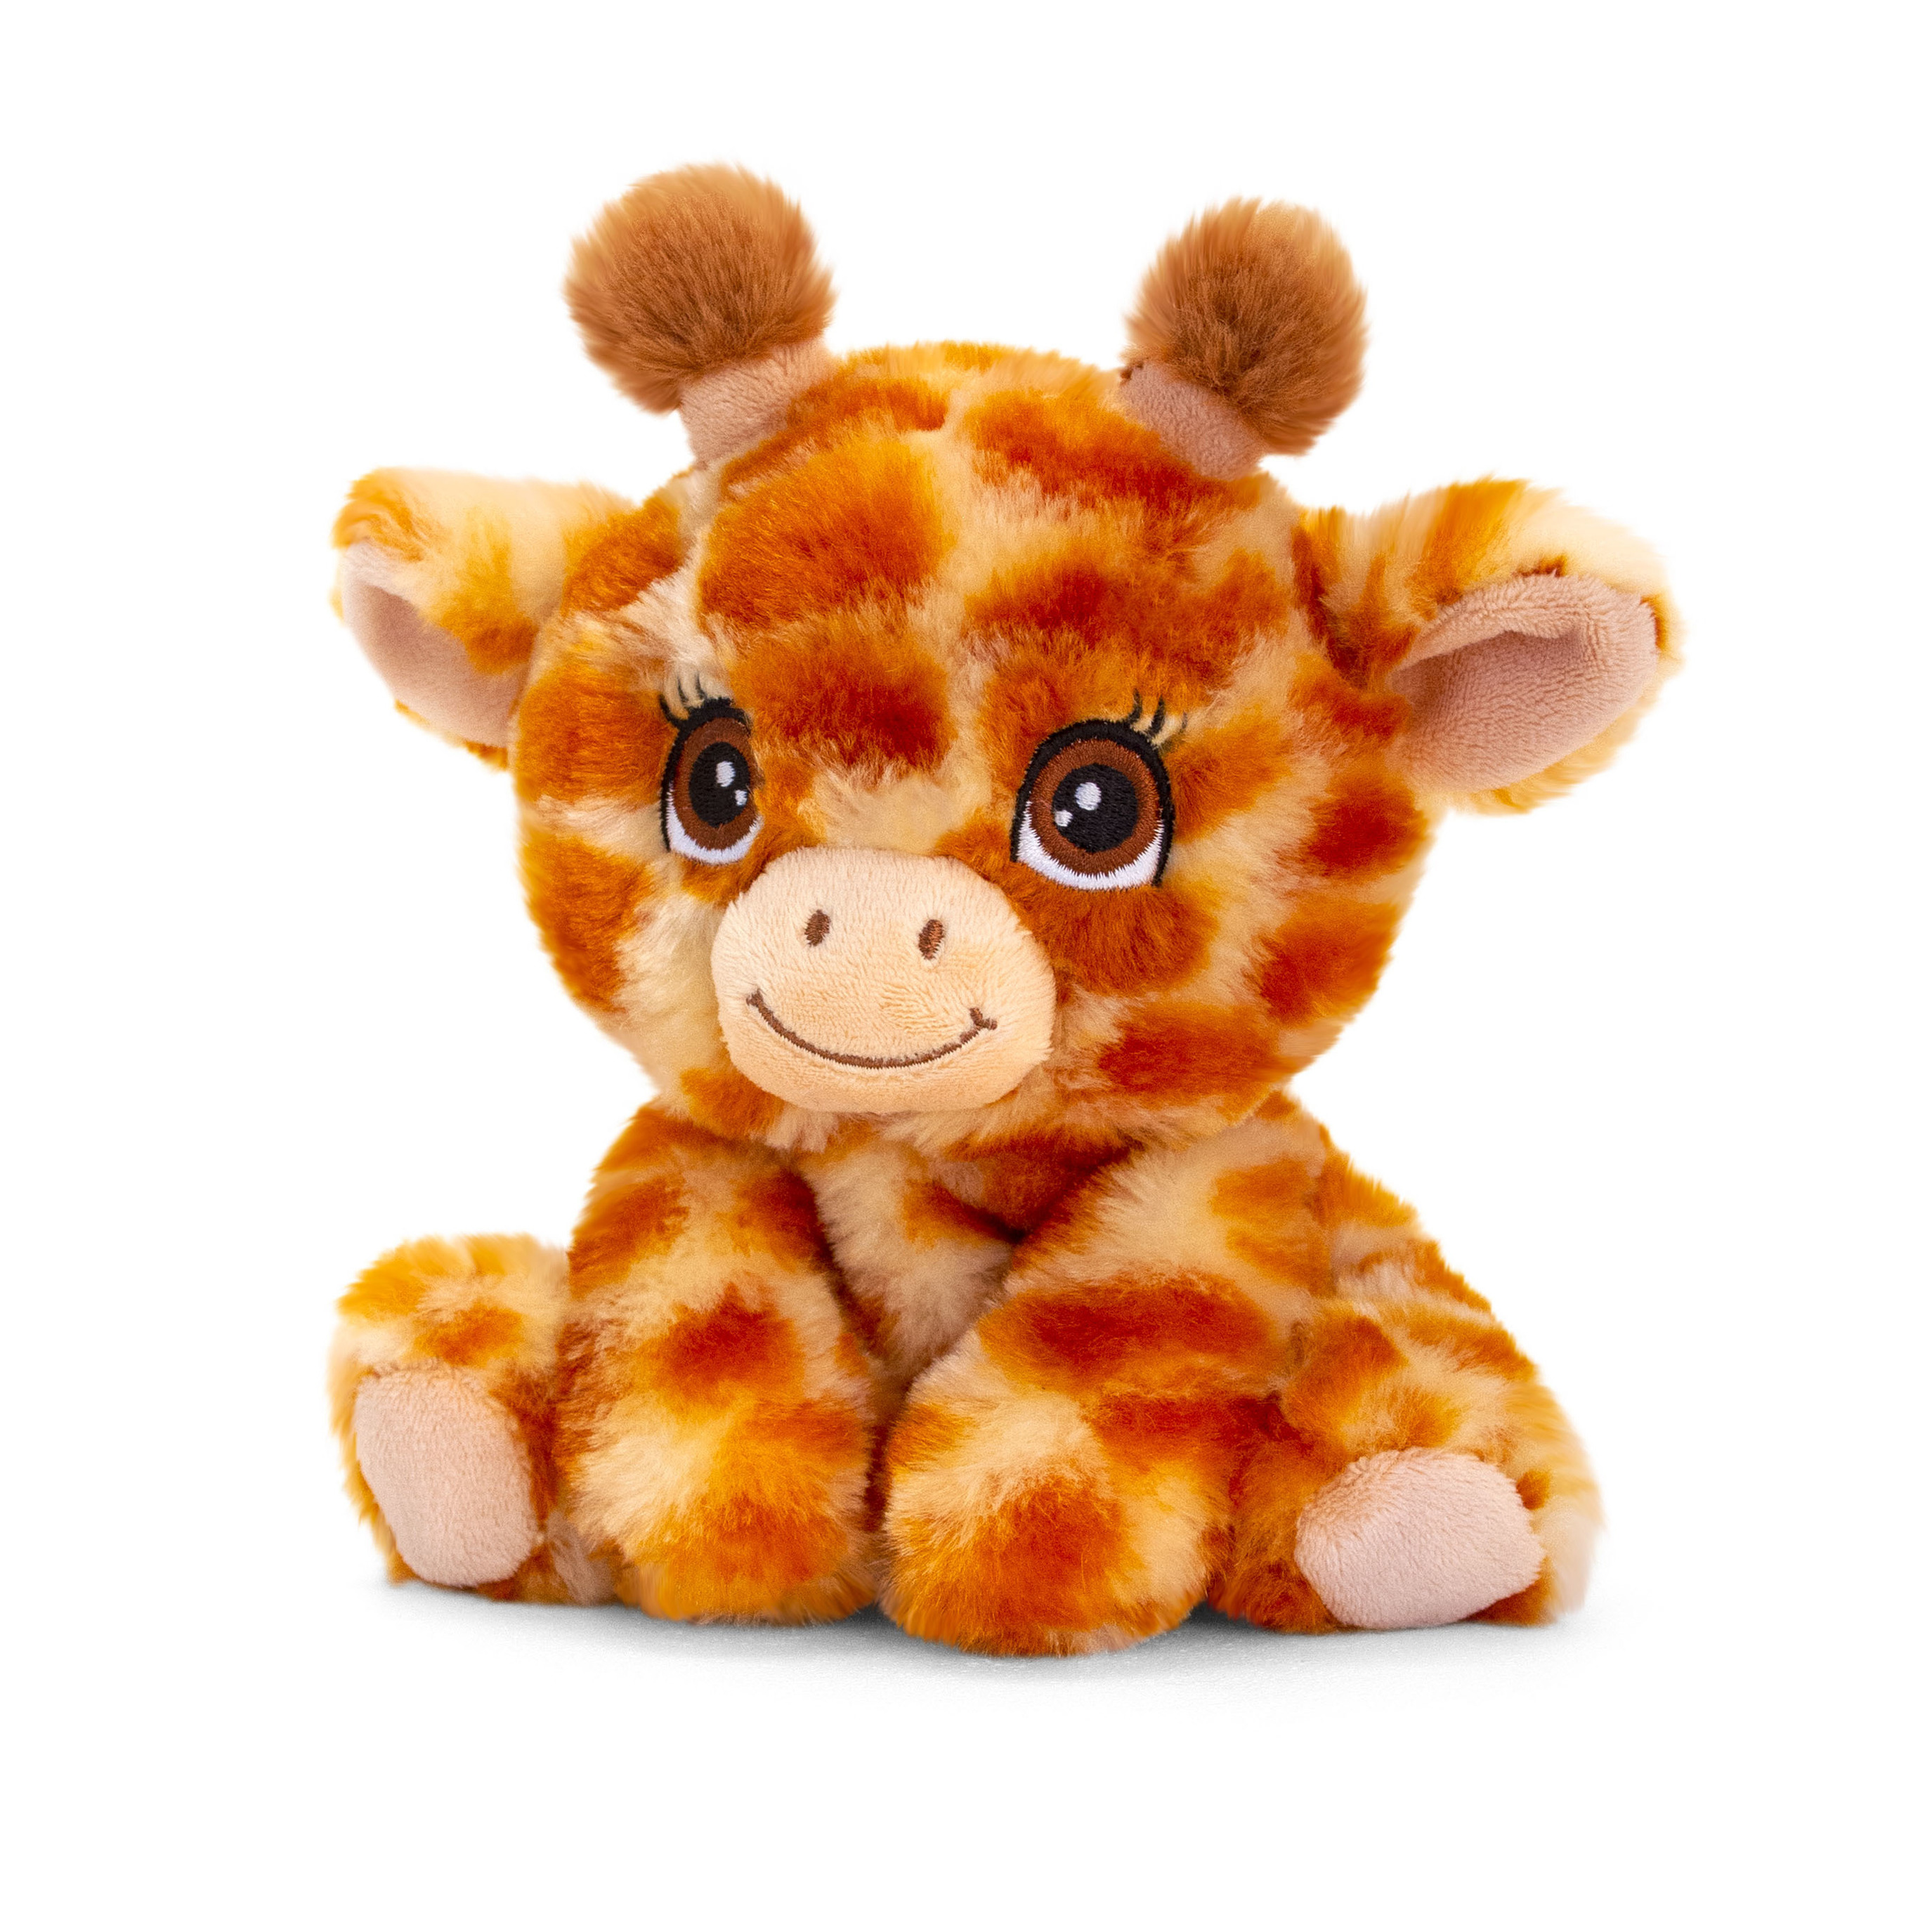 Pluche knuffel dier giraffe super zacht 16 cm